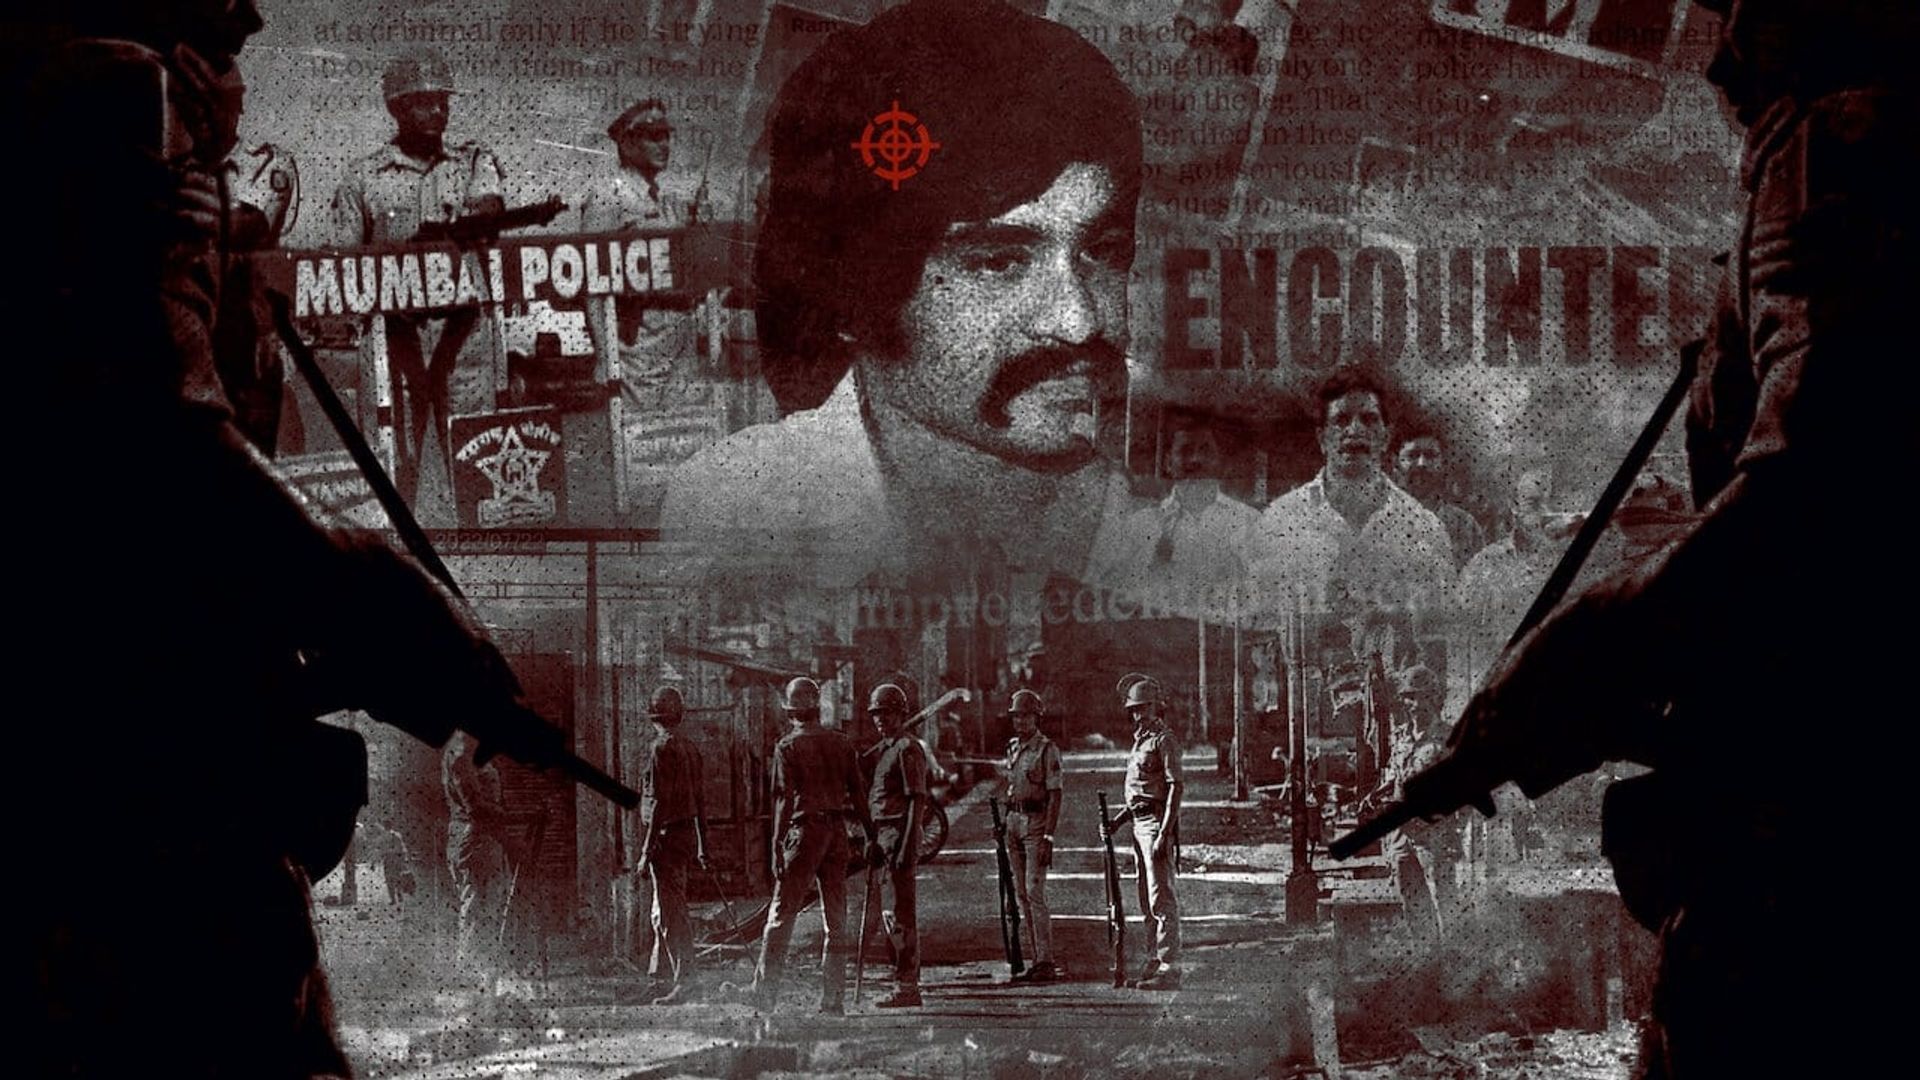 Mumbai Mafia: Police vs the Underworld background